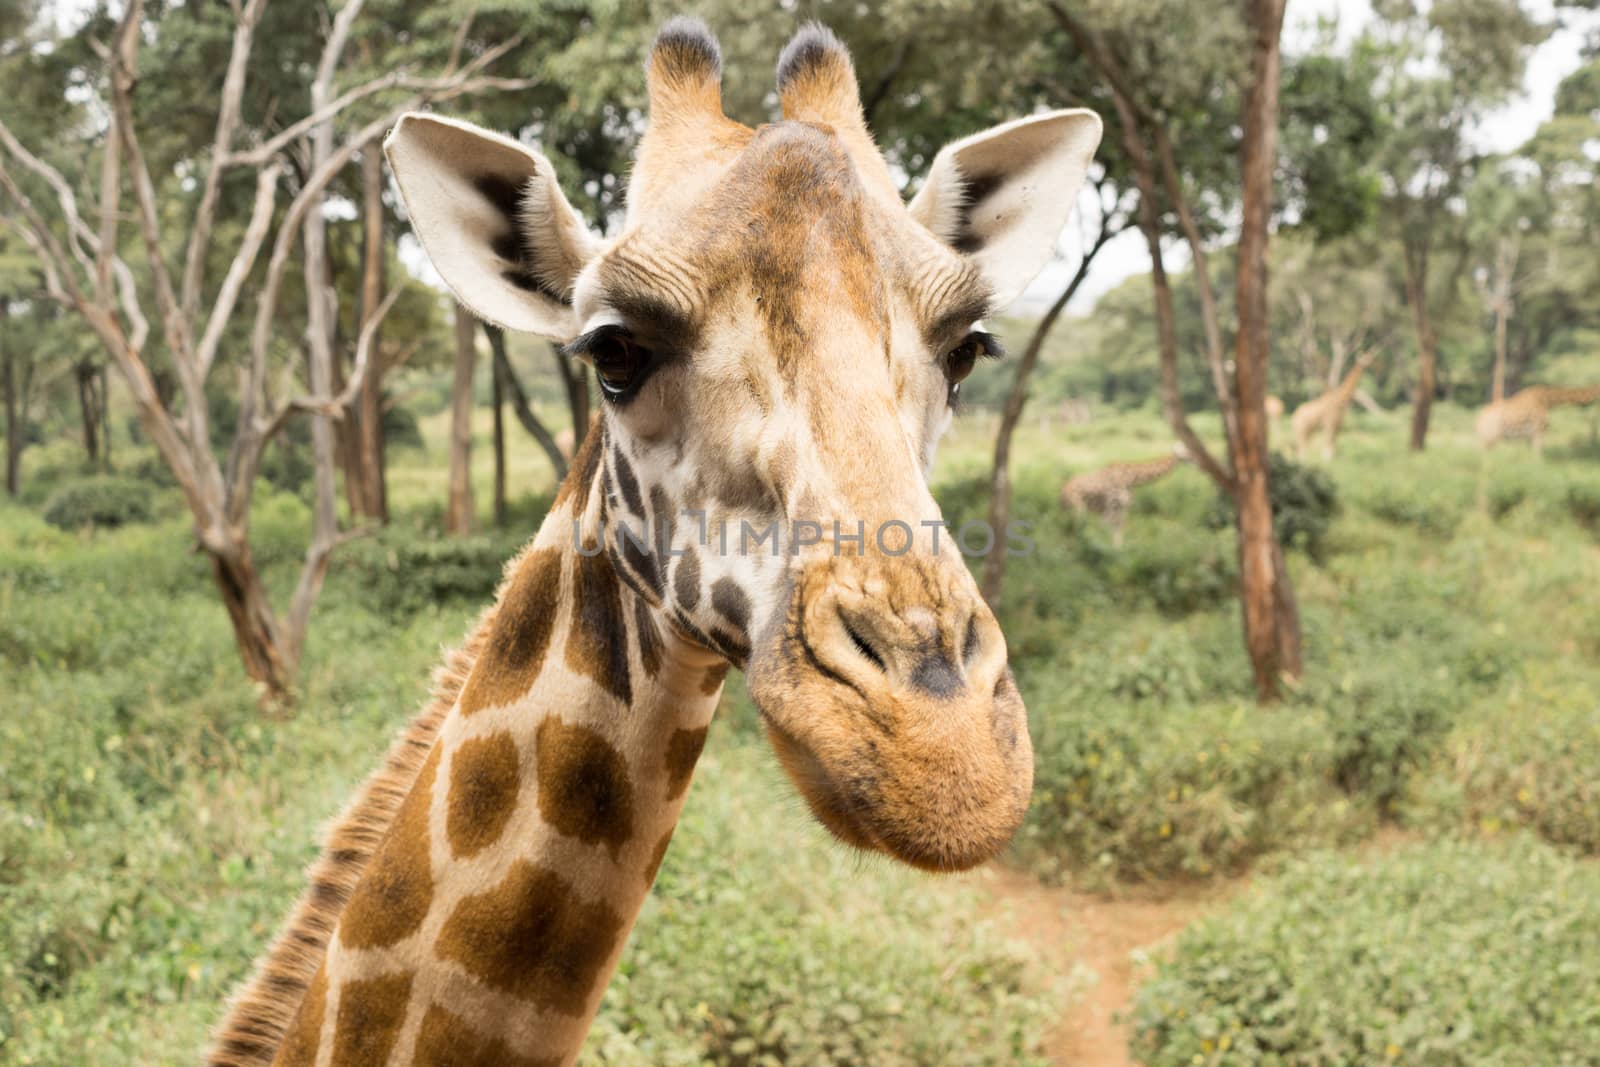 Portrait of a Giraffe by derejeb